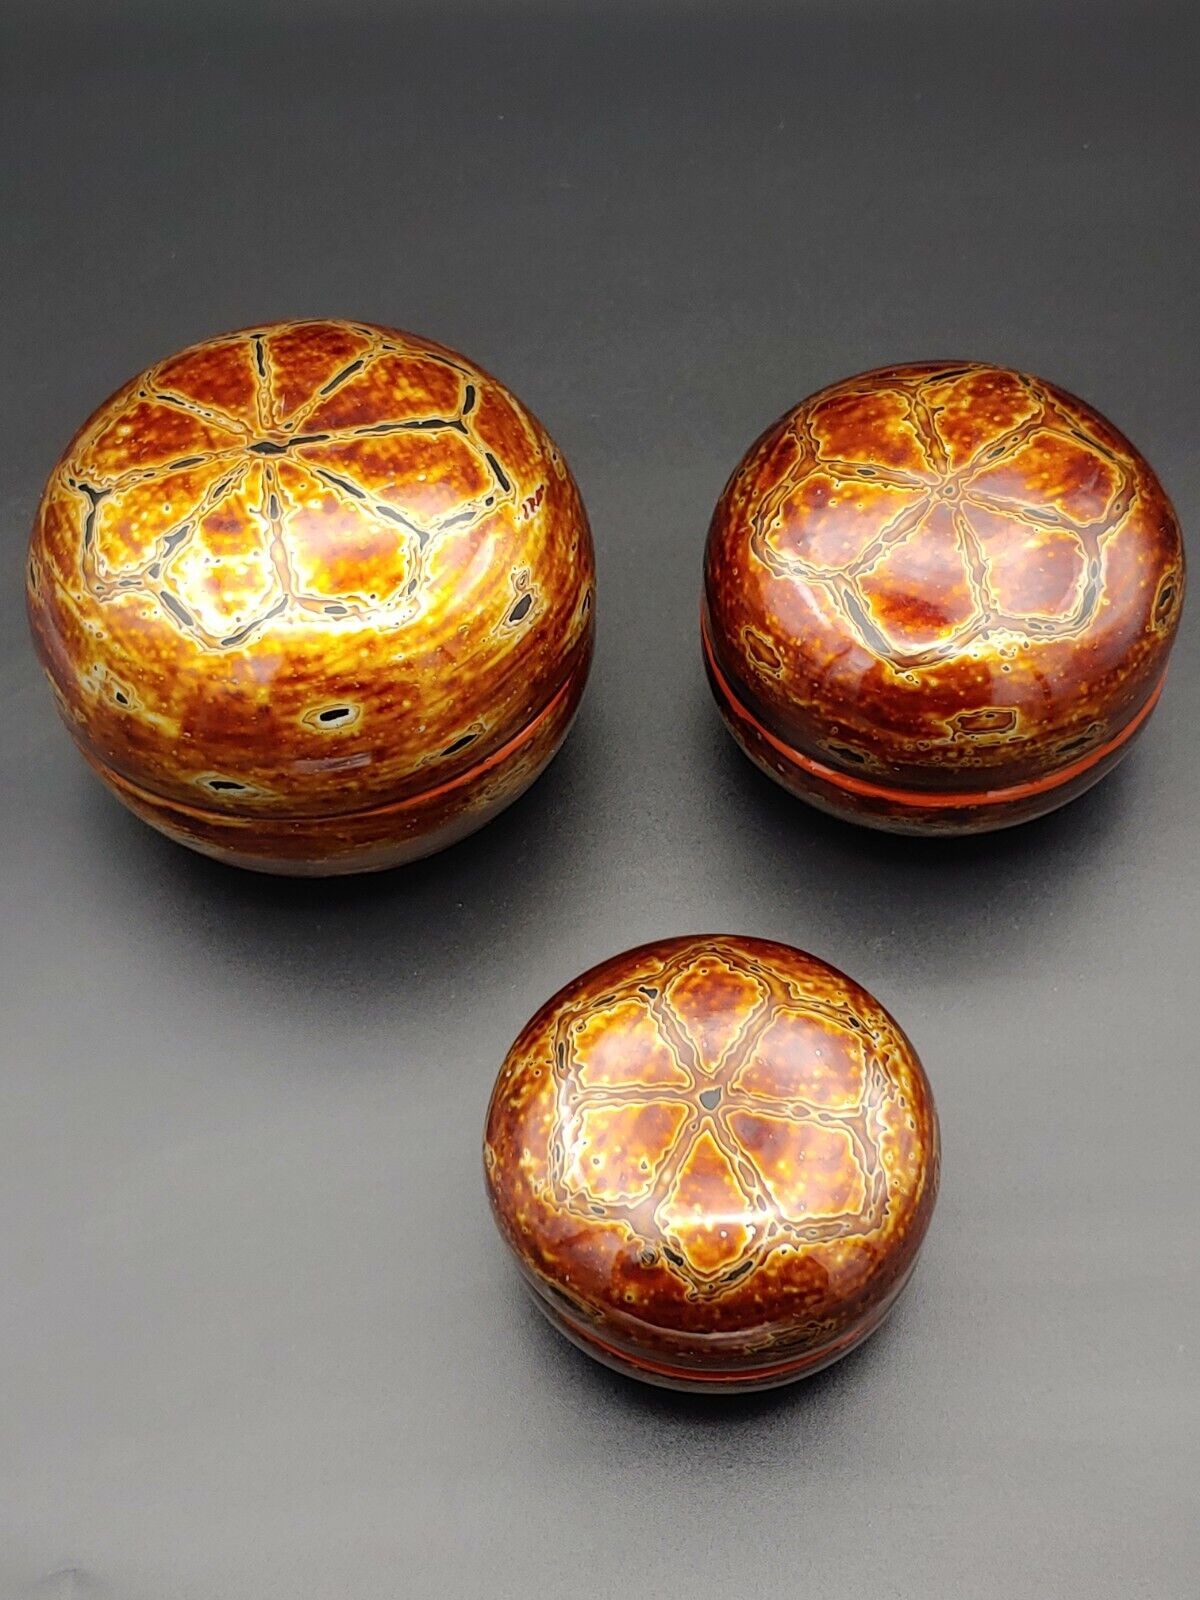 Antique Myanma Mandalay Handicraft Wooden Lacquerware Snacks Jewelry Art Lid Box